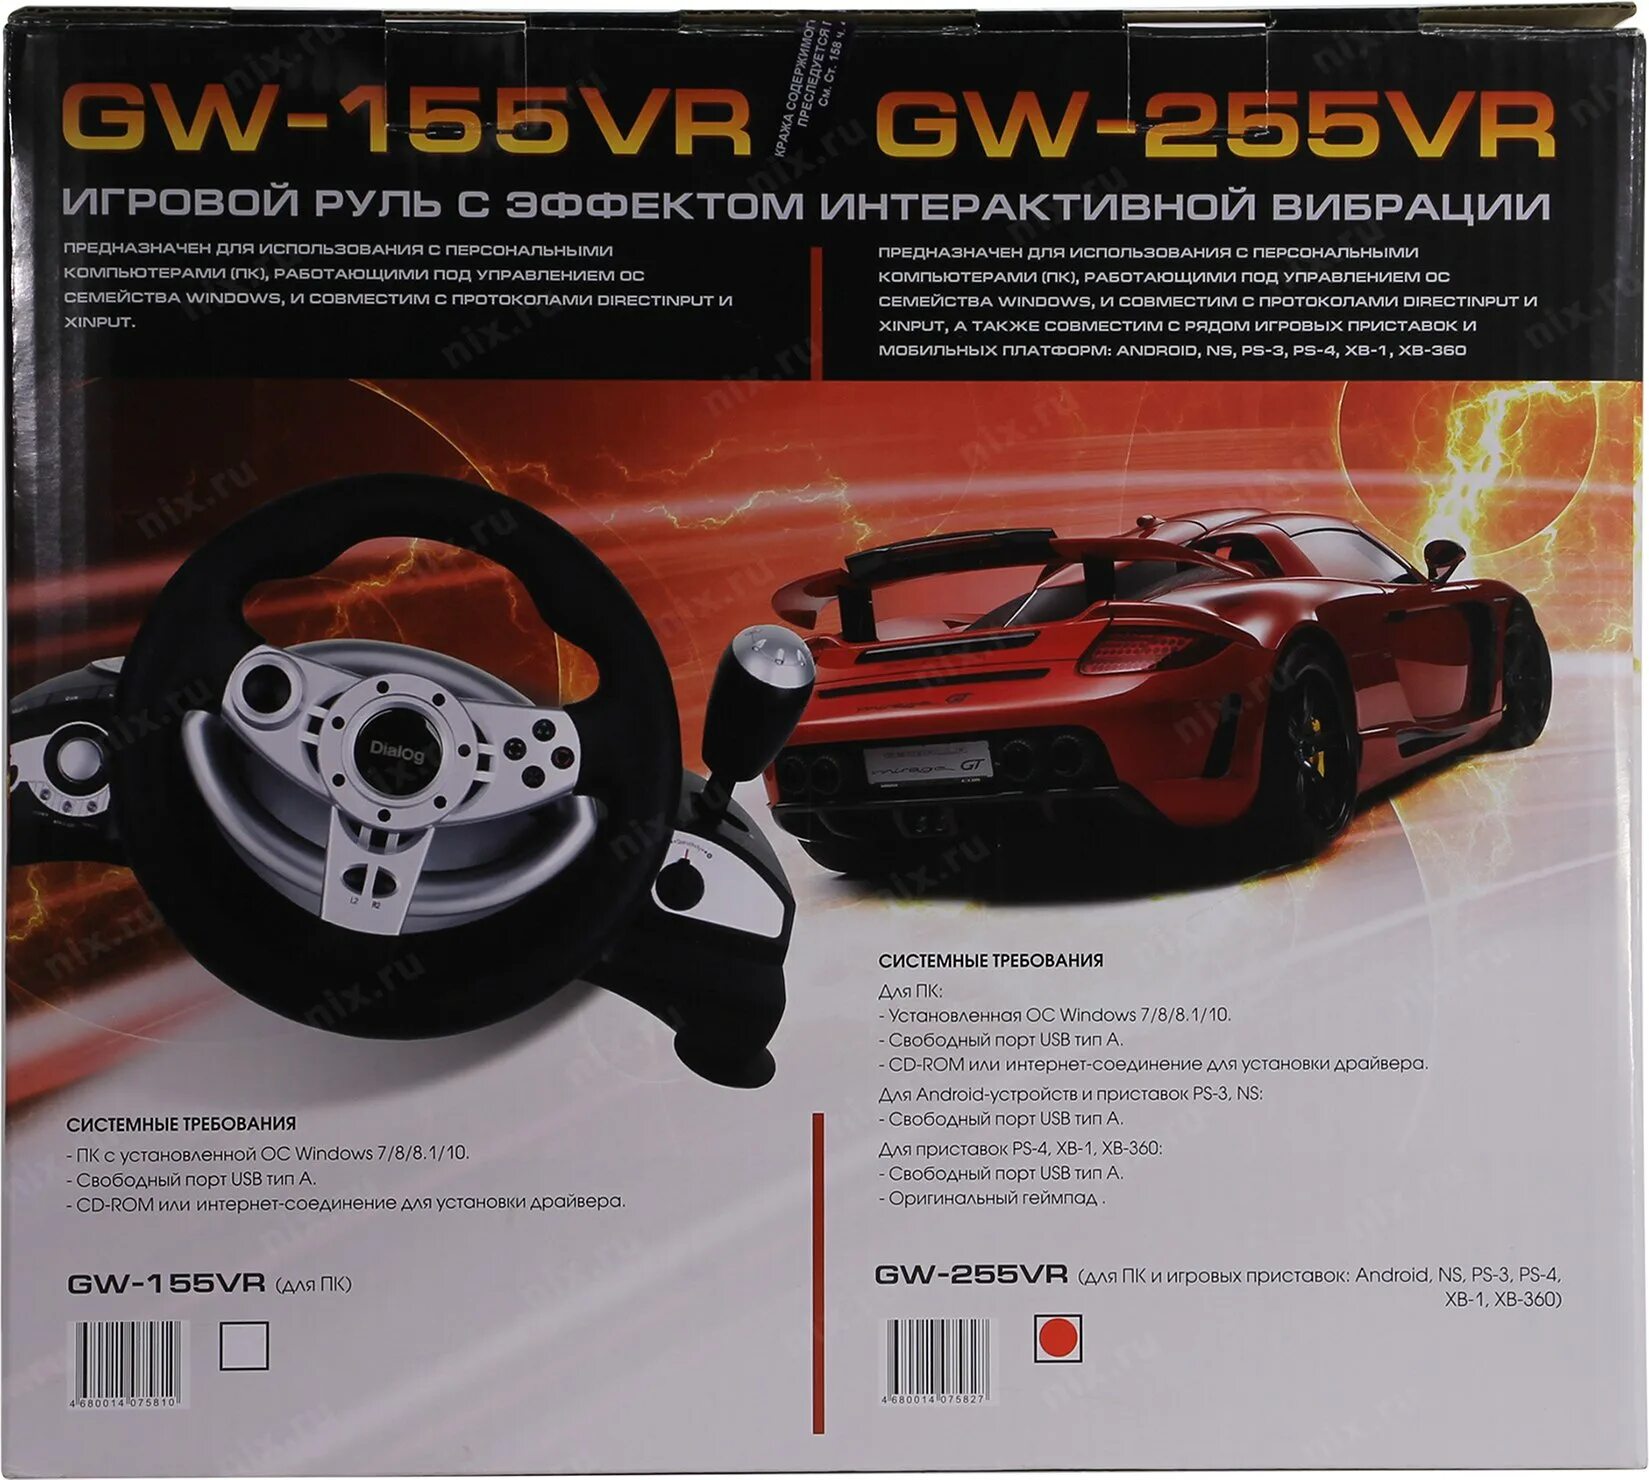 Dialog gw 155vr. Руль dialog GW 155 VR Cyber Pilot. Руль dialog Cyberpilot GW-155vr. Игровой руль dialog GW 255vr. Руль диалог GW 155 VR.